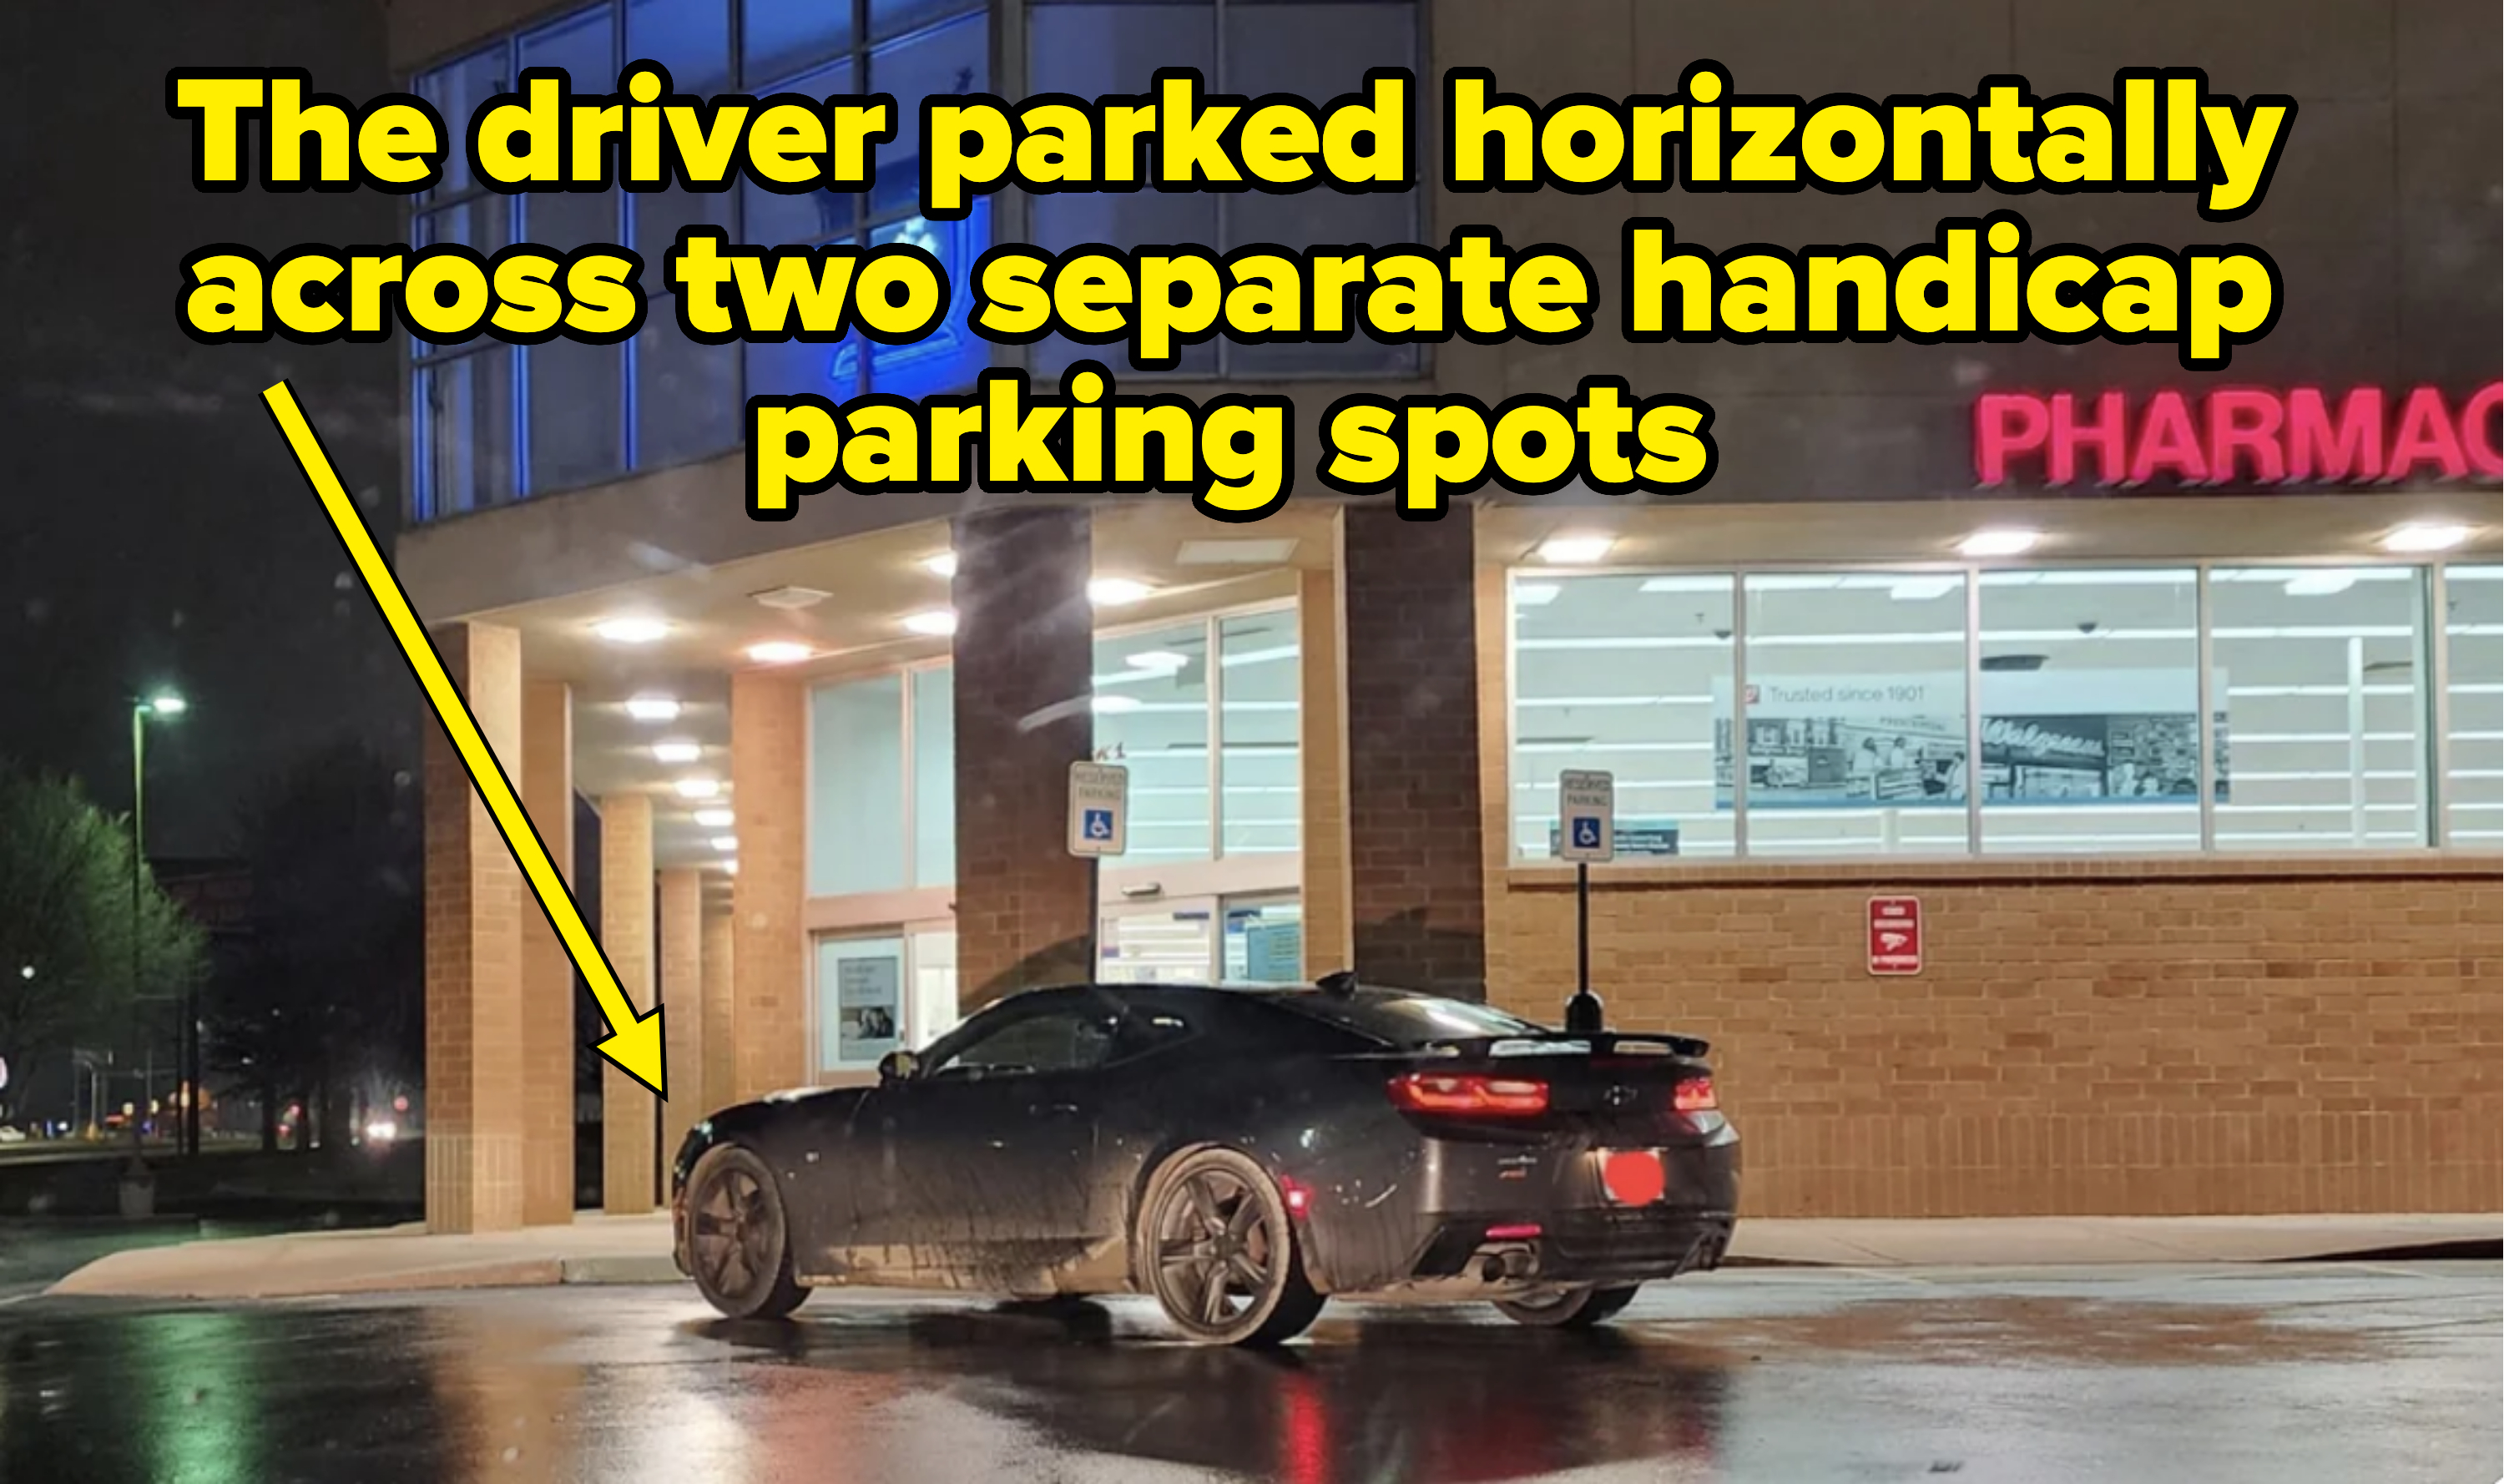 person parked across two handicap spots